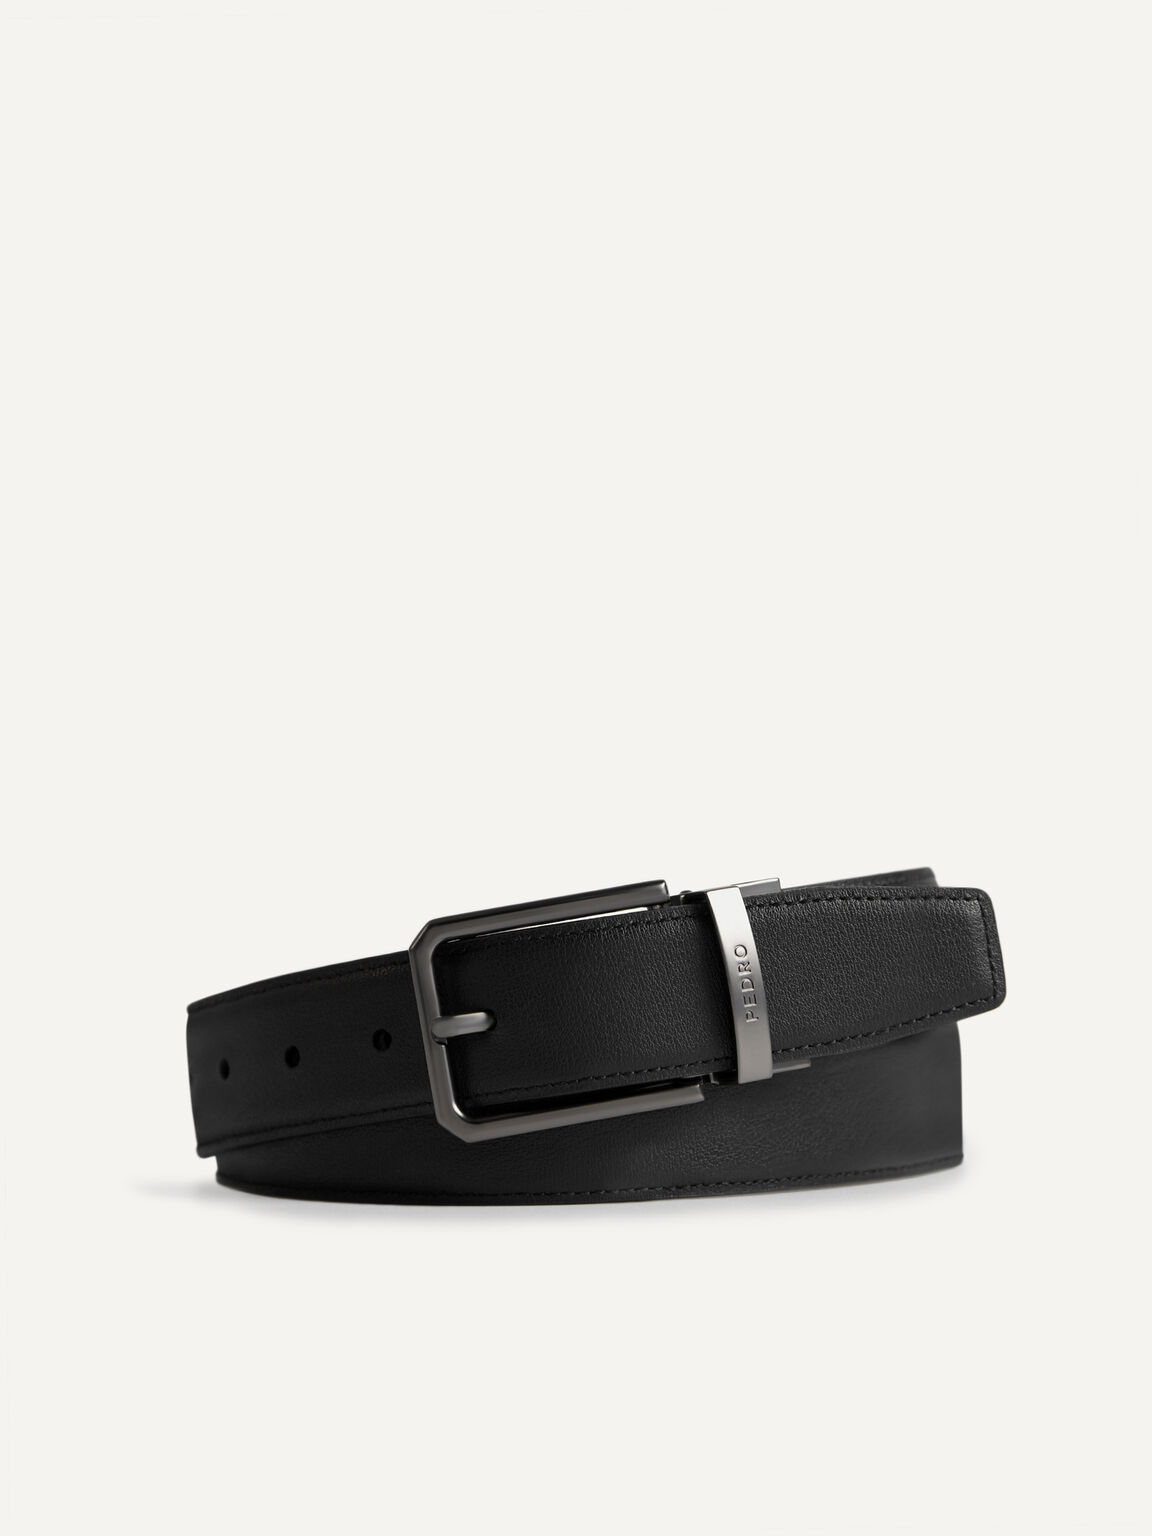 Reversible Textured Leather Belt, Black